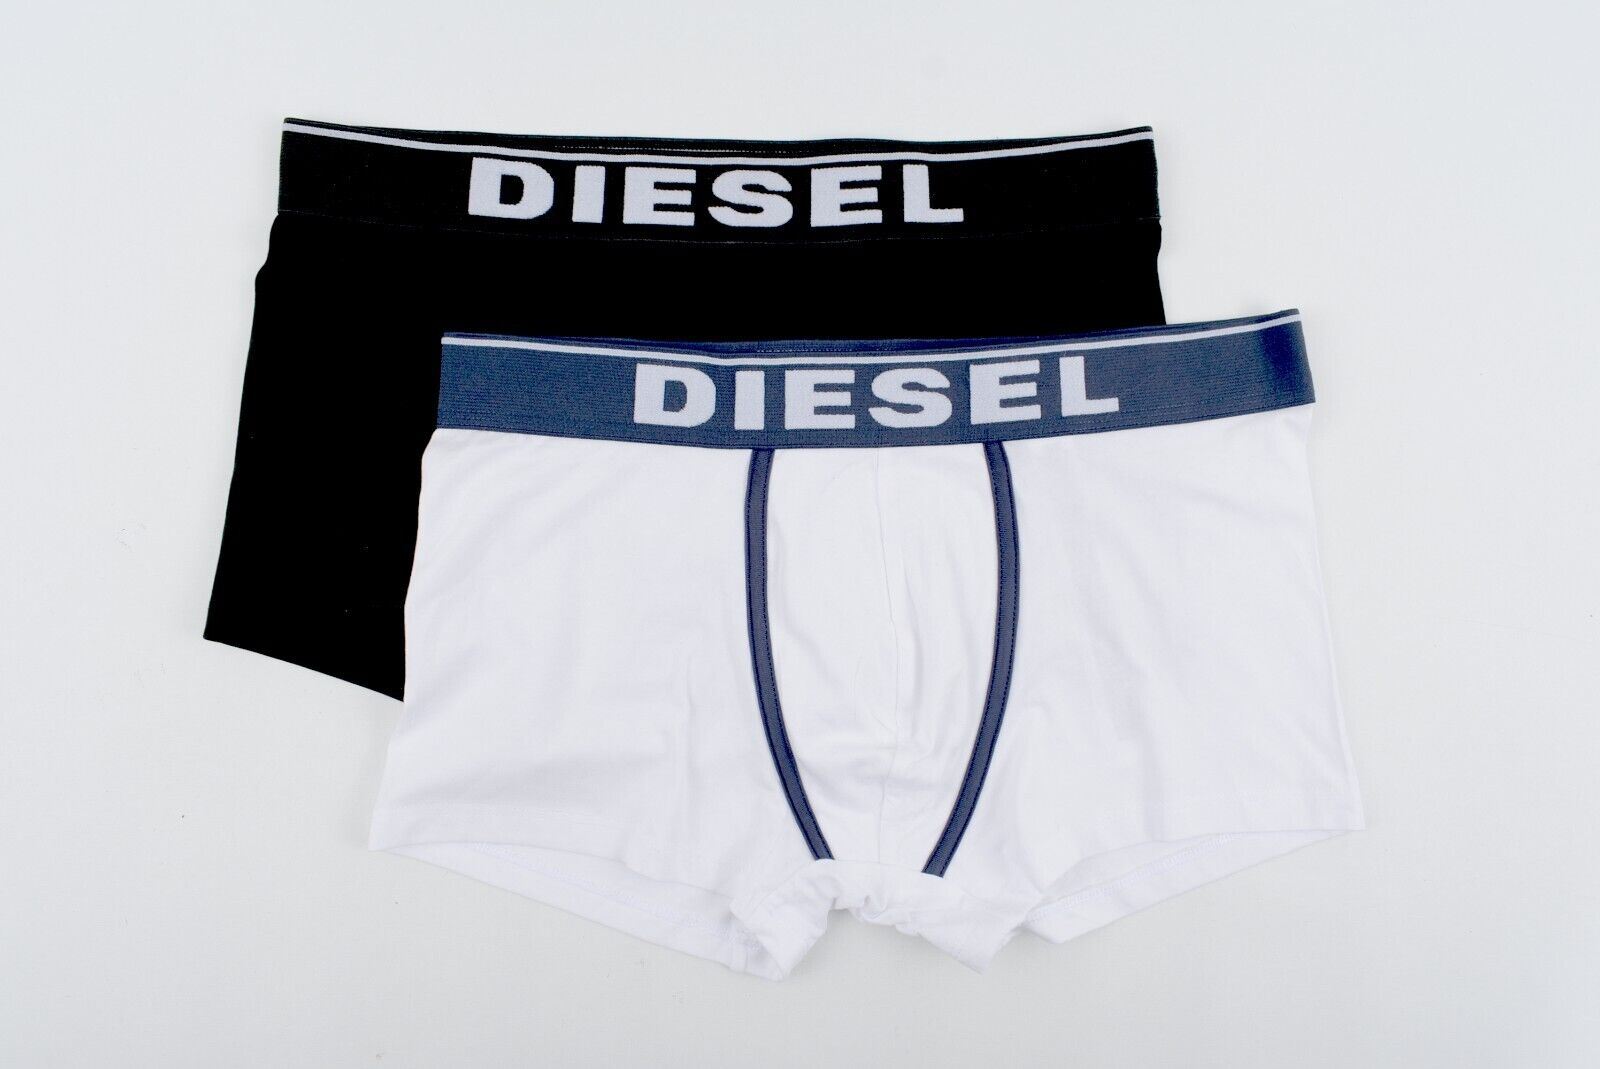 DIESEL Underwear: Men's DAMIEN 3-pk Boxer Trunks, Black/White/navy, size M